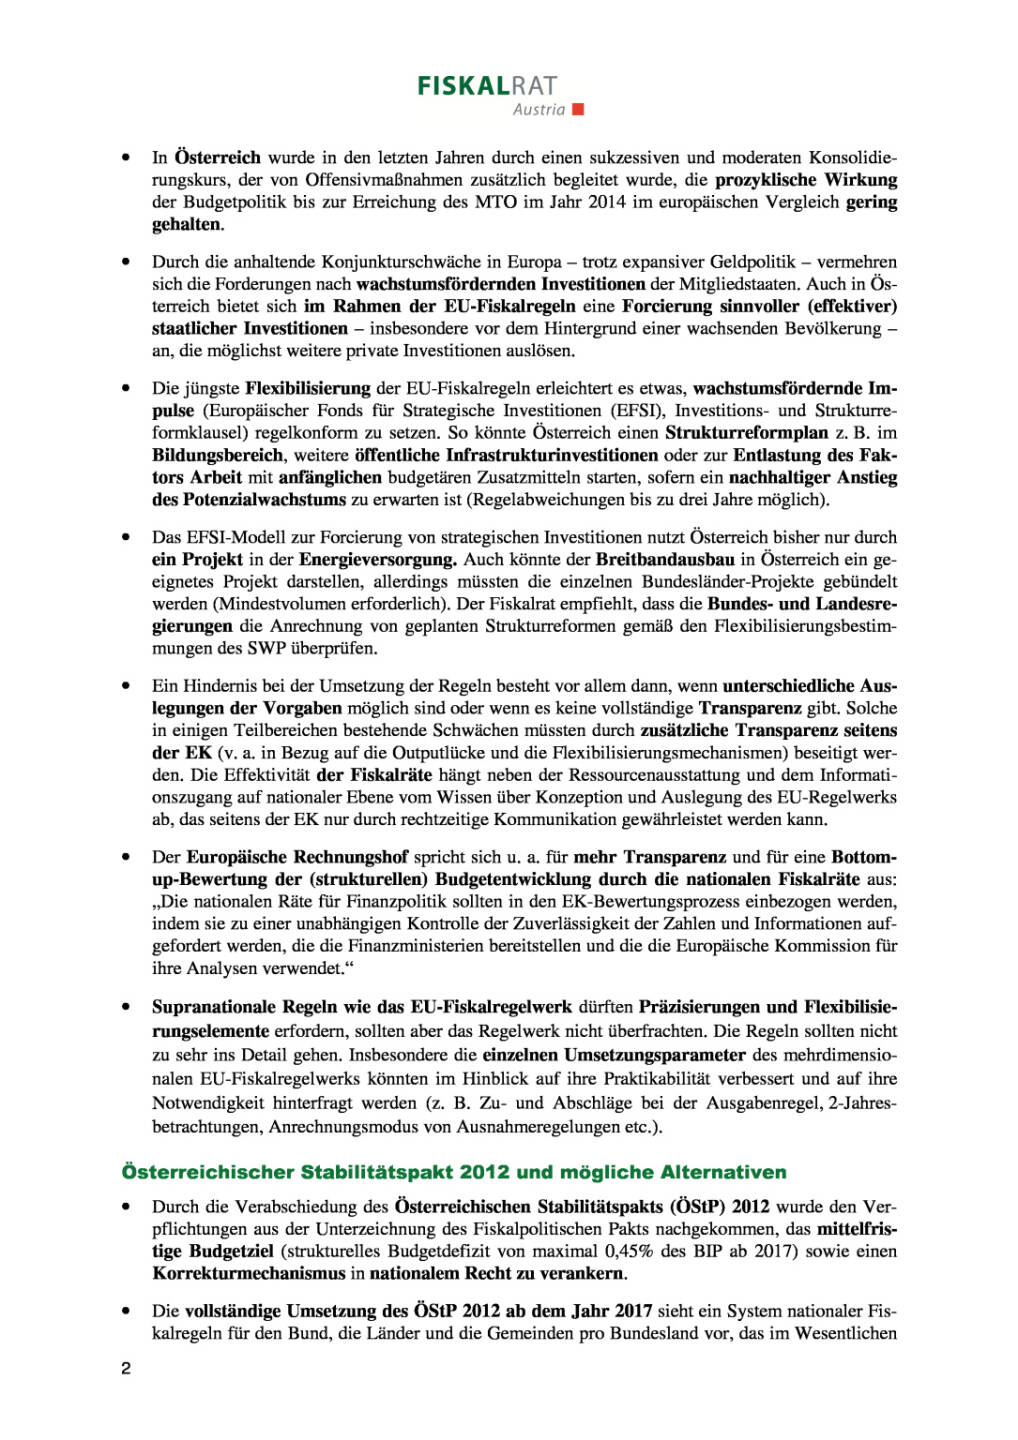 Fiskalrat: Empfehlung zur Budgetpolitik, Seite 2/4, komplettes Dokument unter http://boerse-social.com/static/uploads/file_1345_fiskalrat_empfehlung_zur_budgetpolitik.pdf